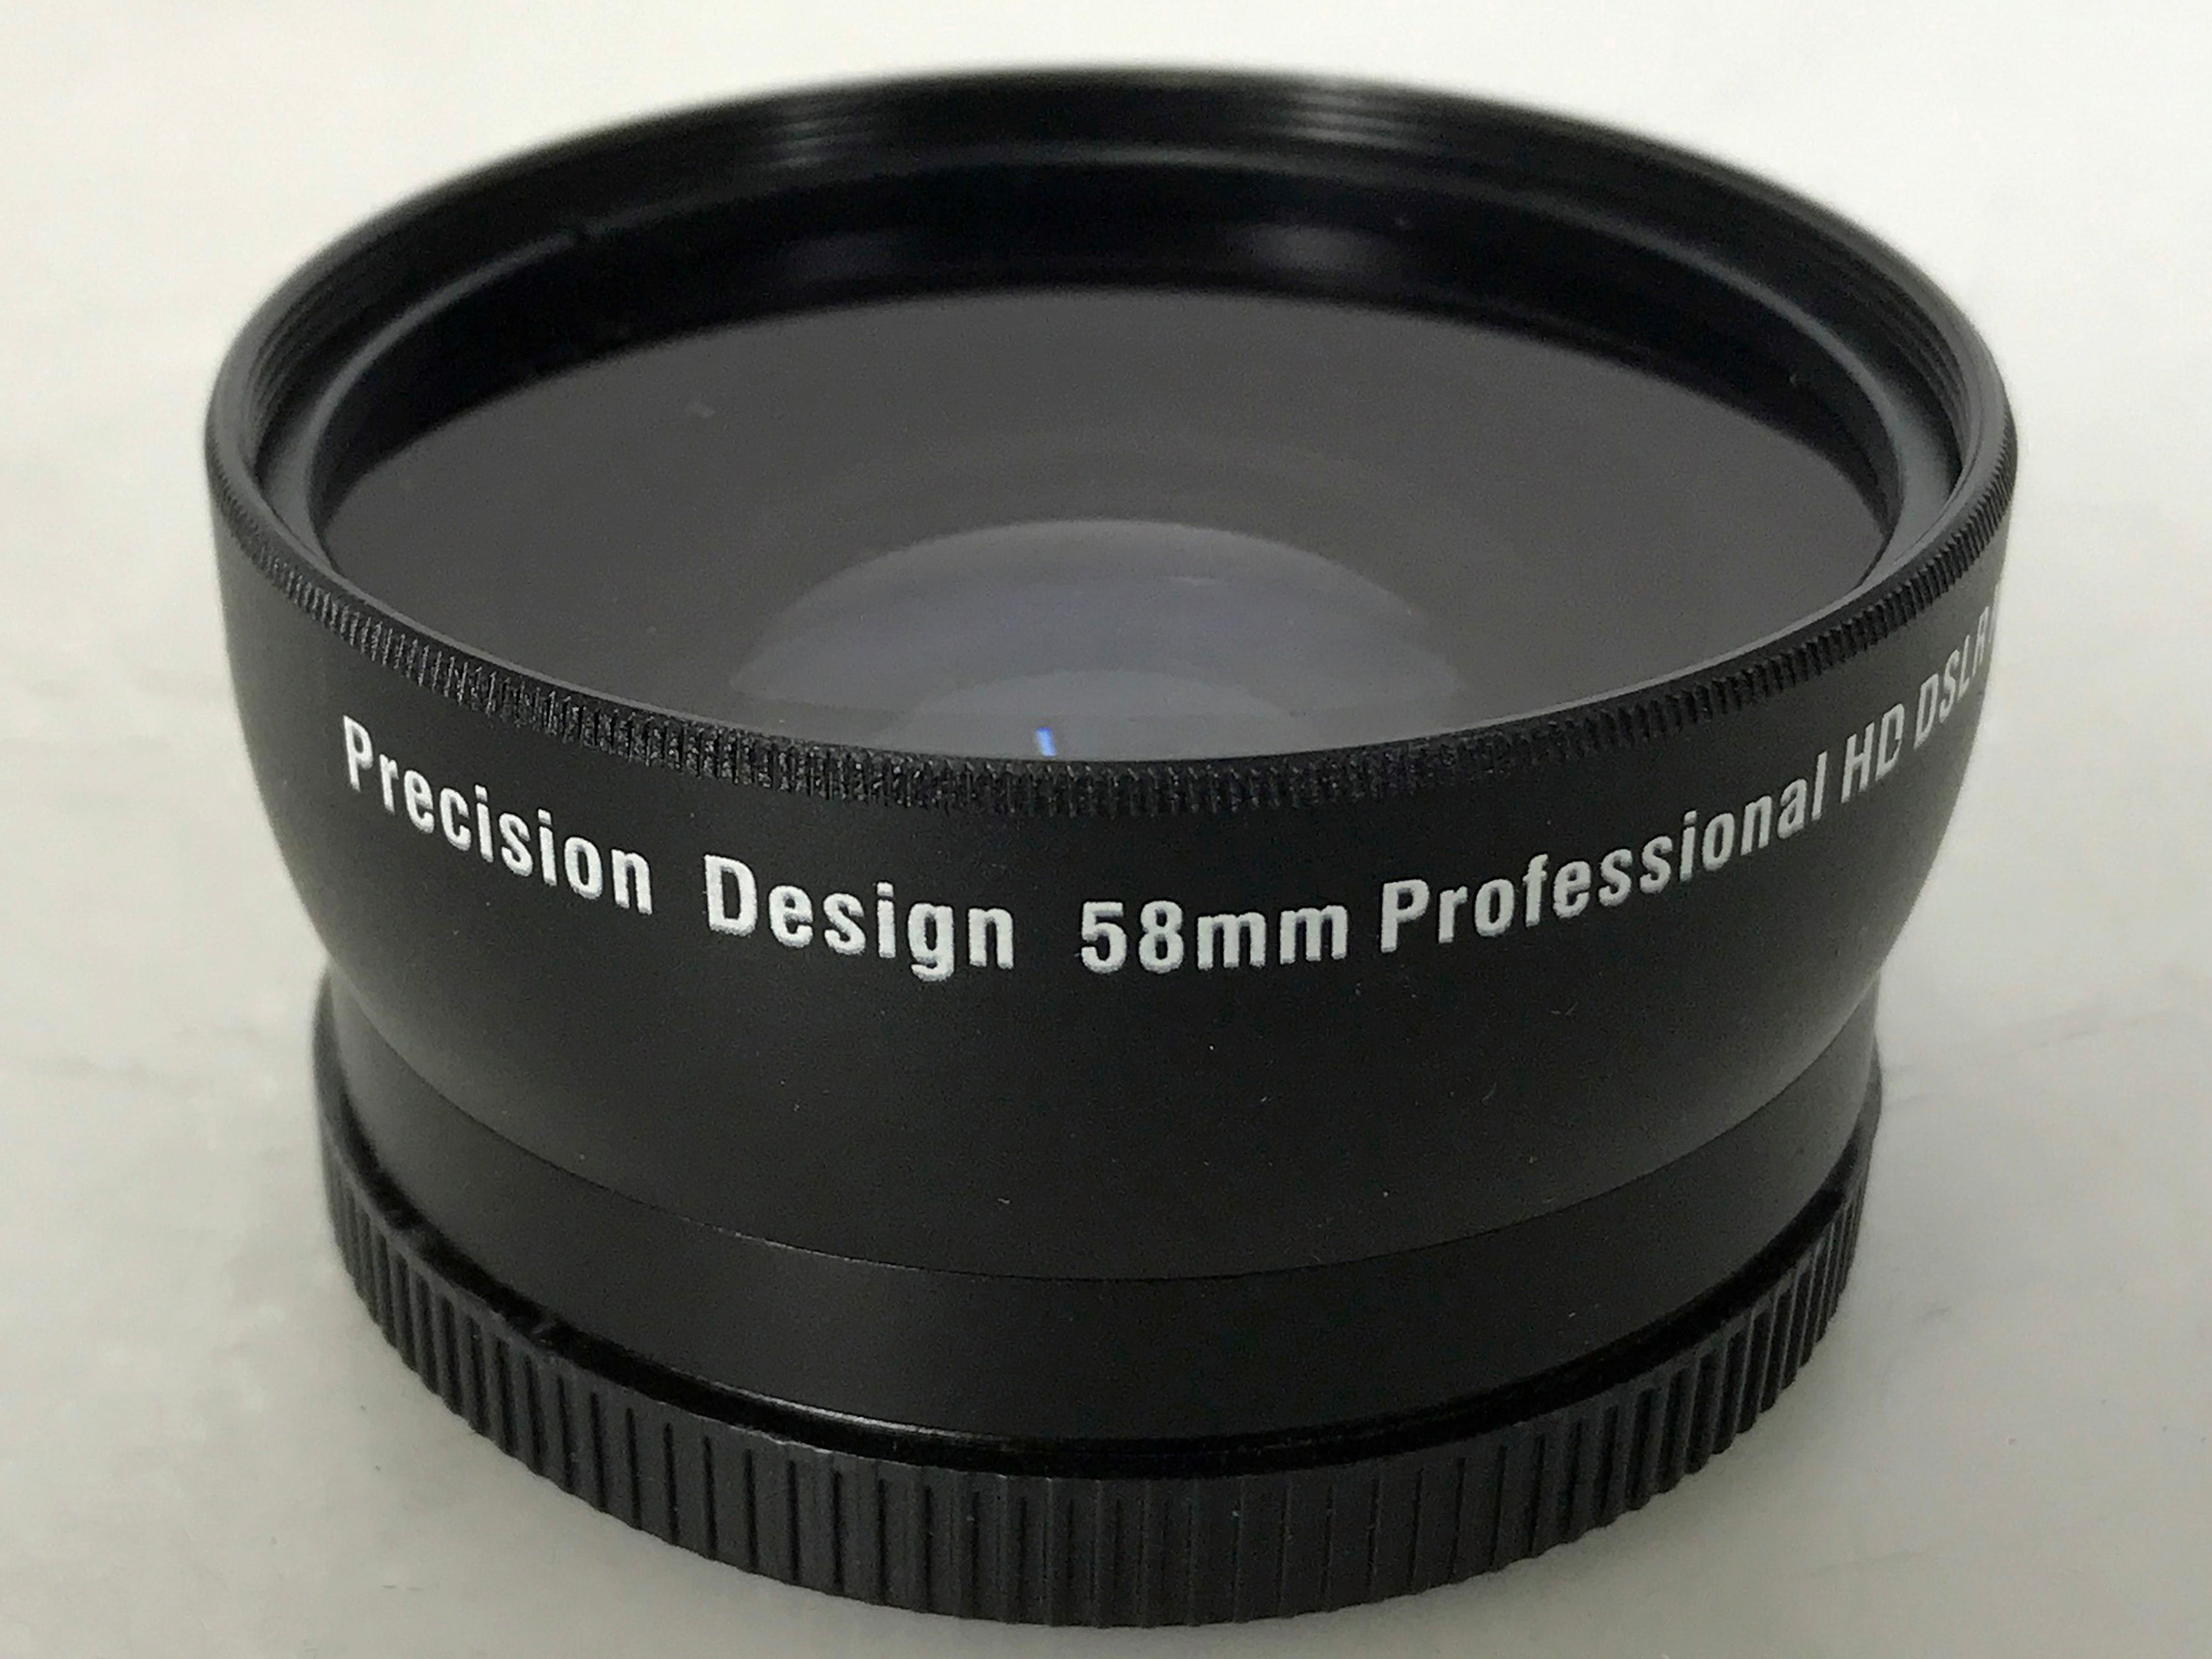 Precision Design 58mm Professional HD DSLR MC AF 0.45x Wide Angle Lens